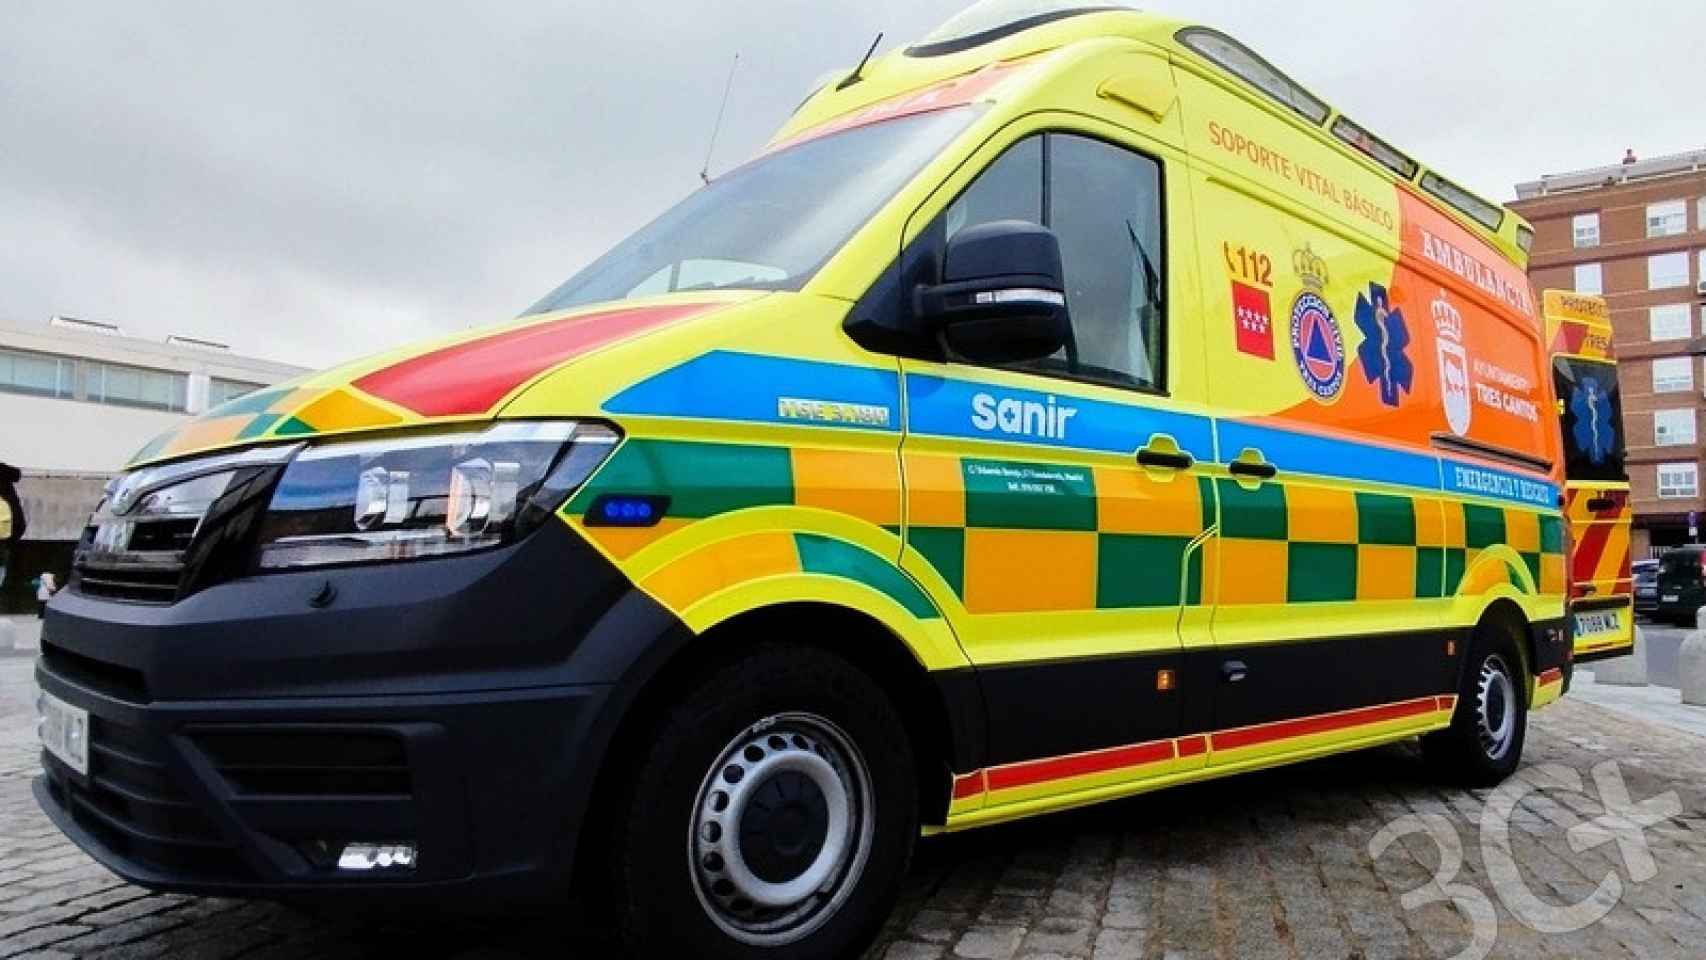 Una ambulancia de Sanir, la marca de transporte de pacientes de Alsa